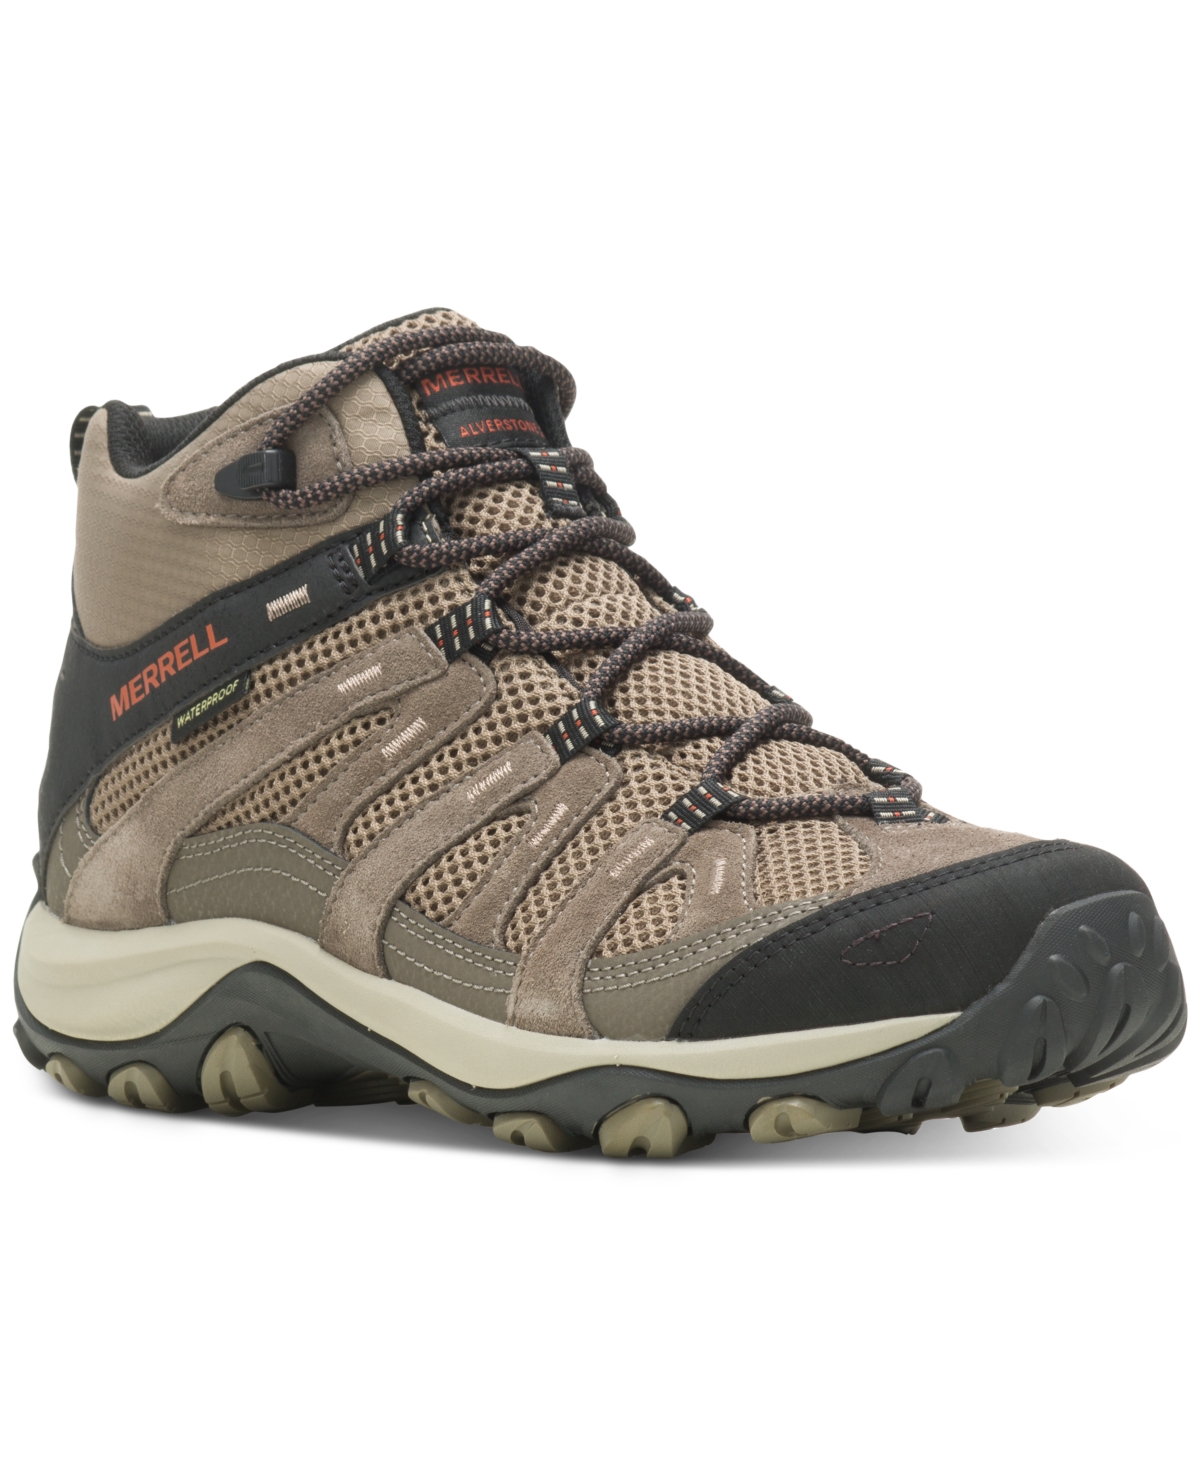 Men's Alverstone 2 Mid Waterproof Lace-Up Hiking Boots - Boulder/brindle